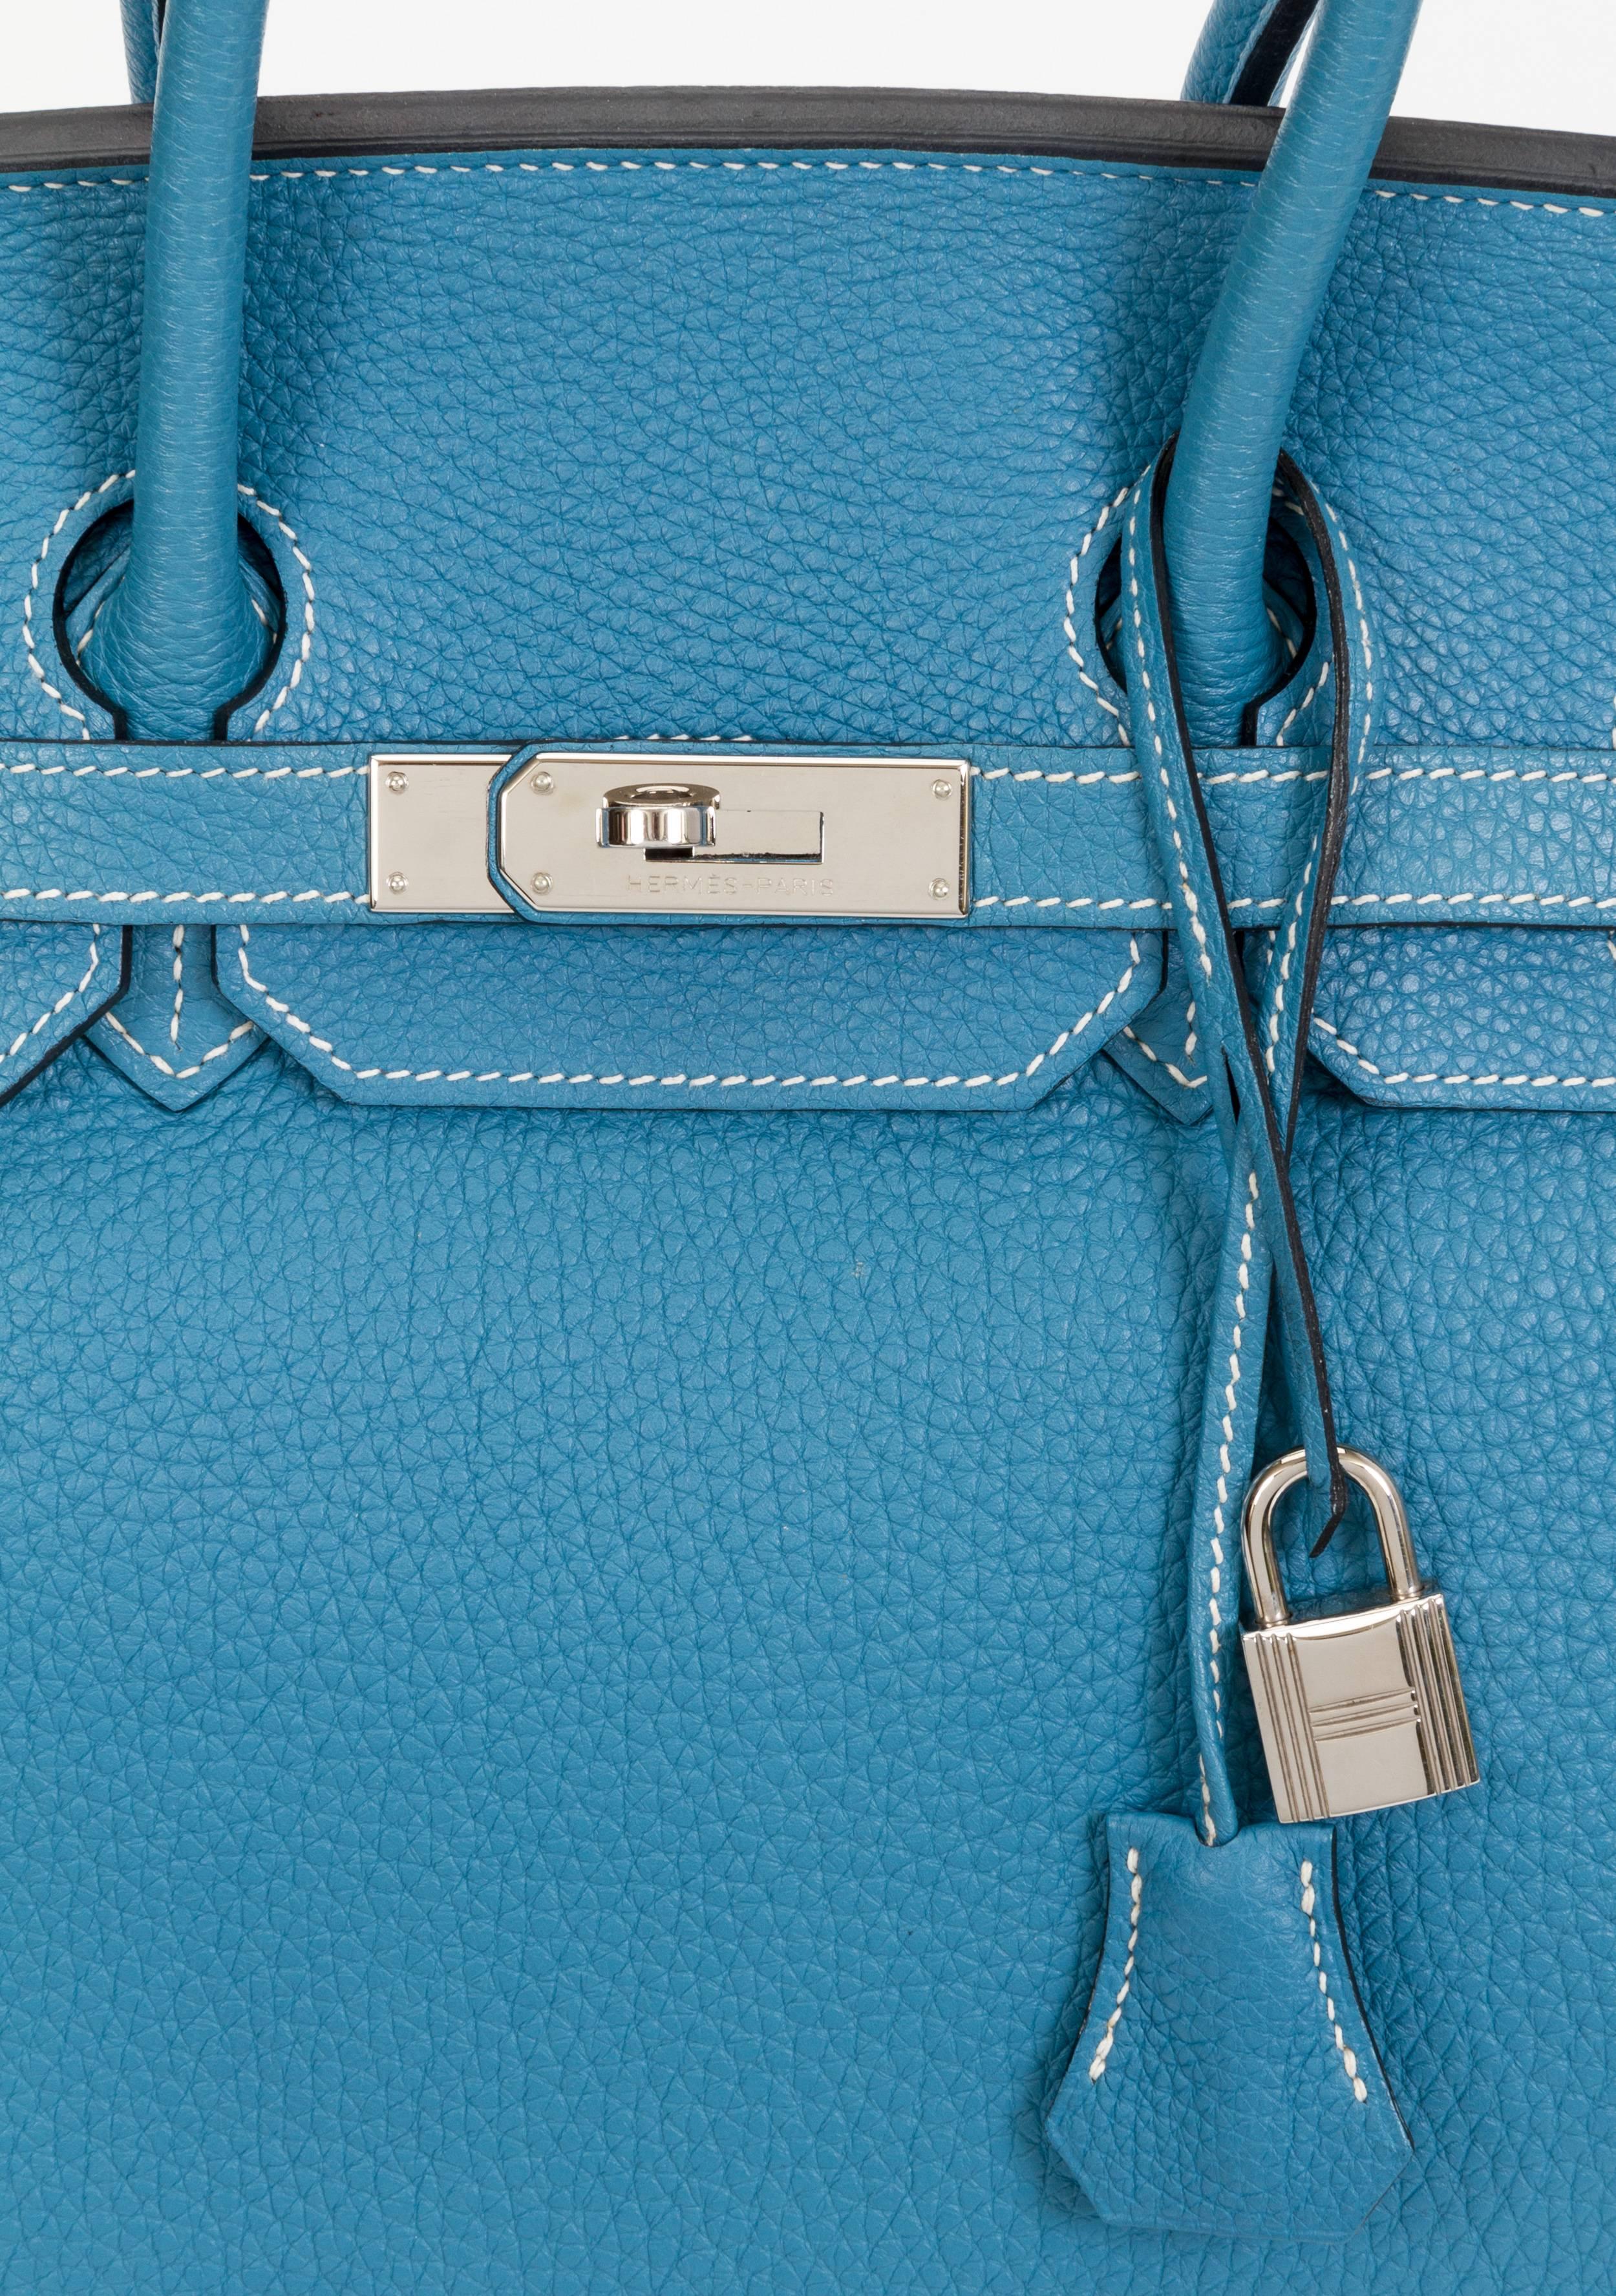  Hermès 35cm Blue Jean Clemence Birkin Bag 1